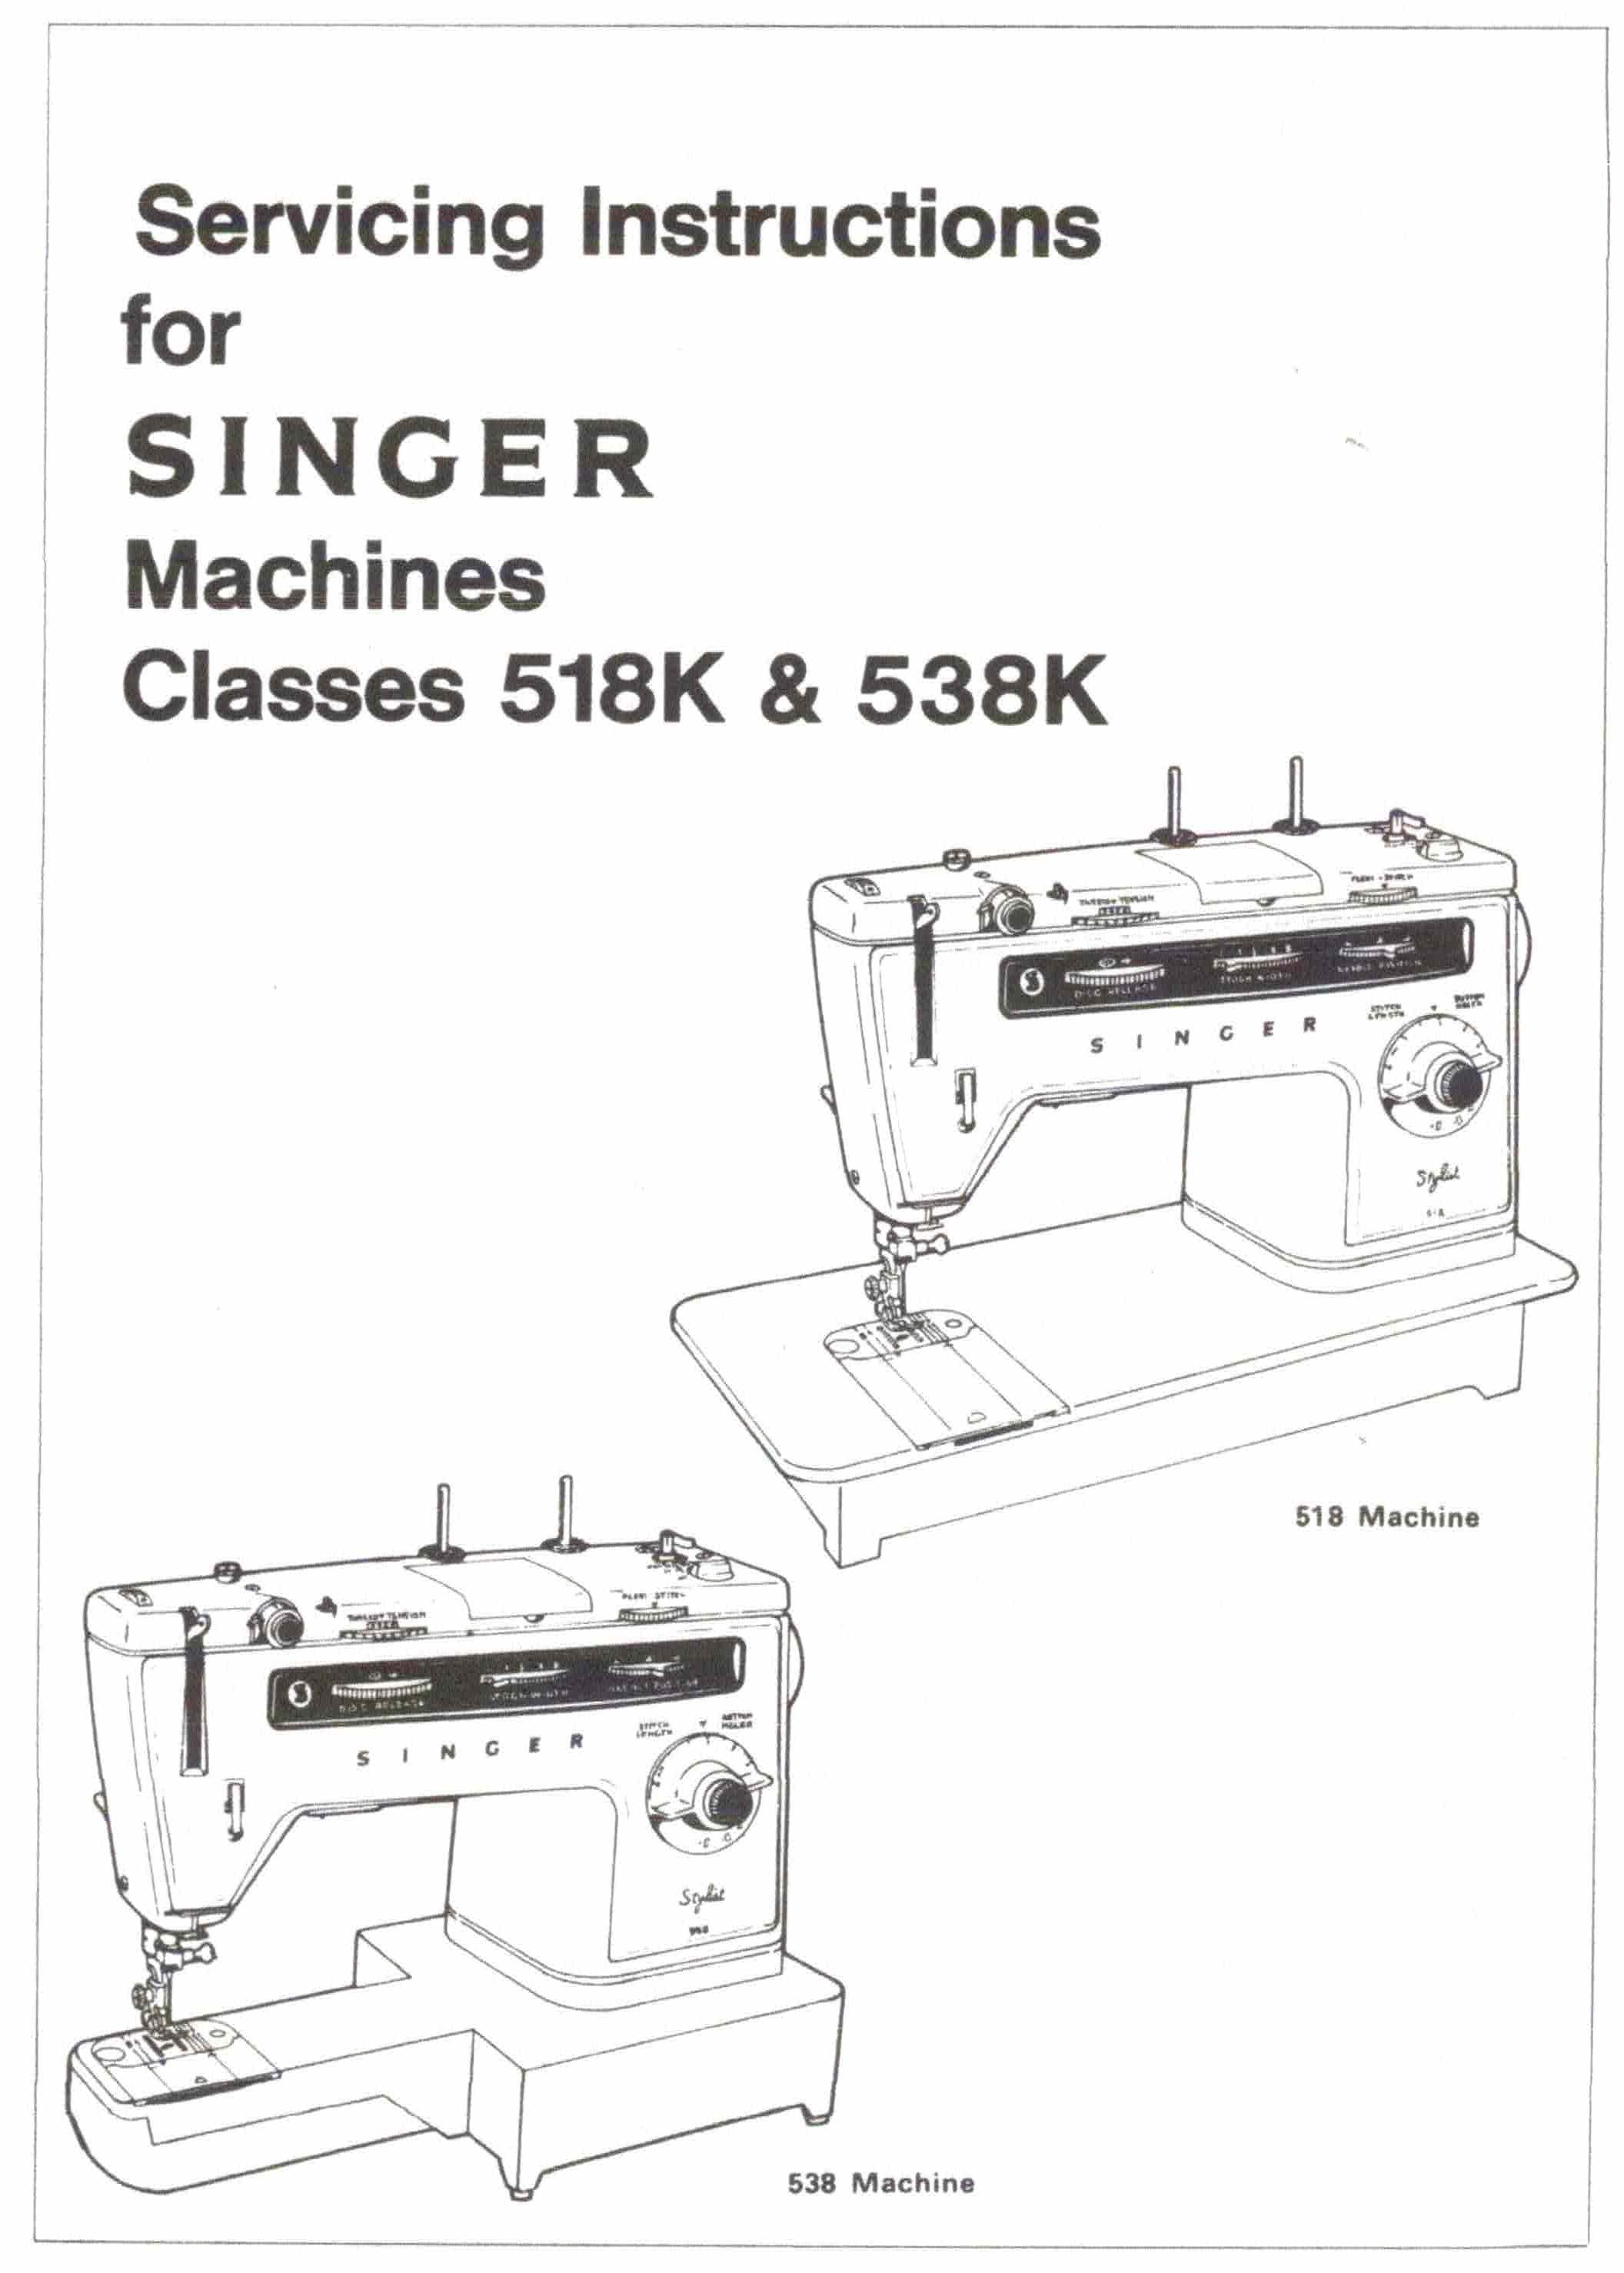 Brother XL3500 Xl3500i XL3510 XL3750 Sewing Machine Operation